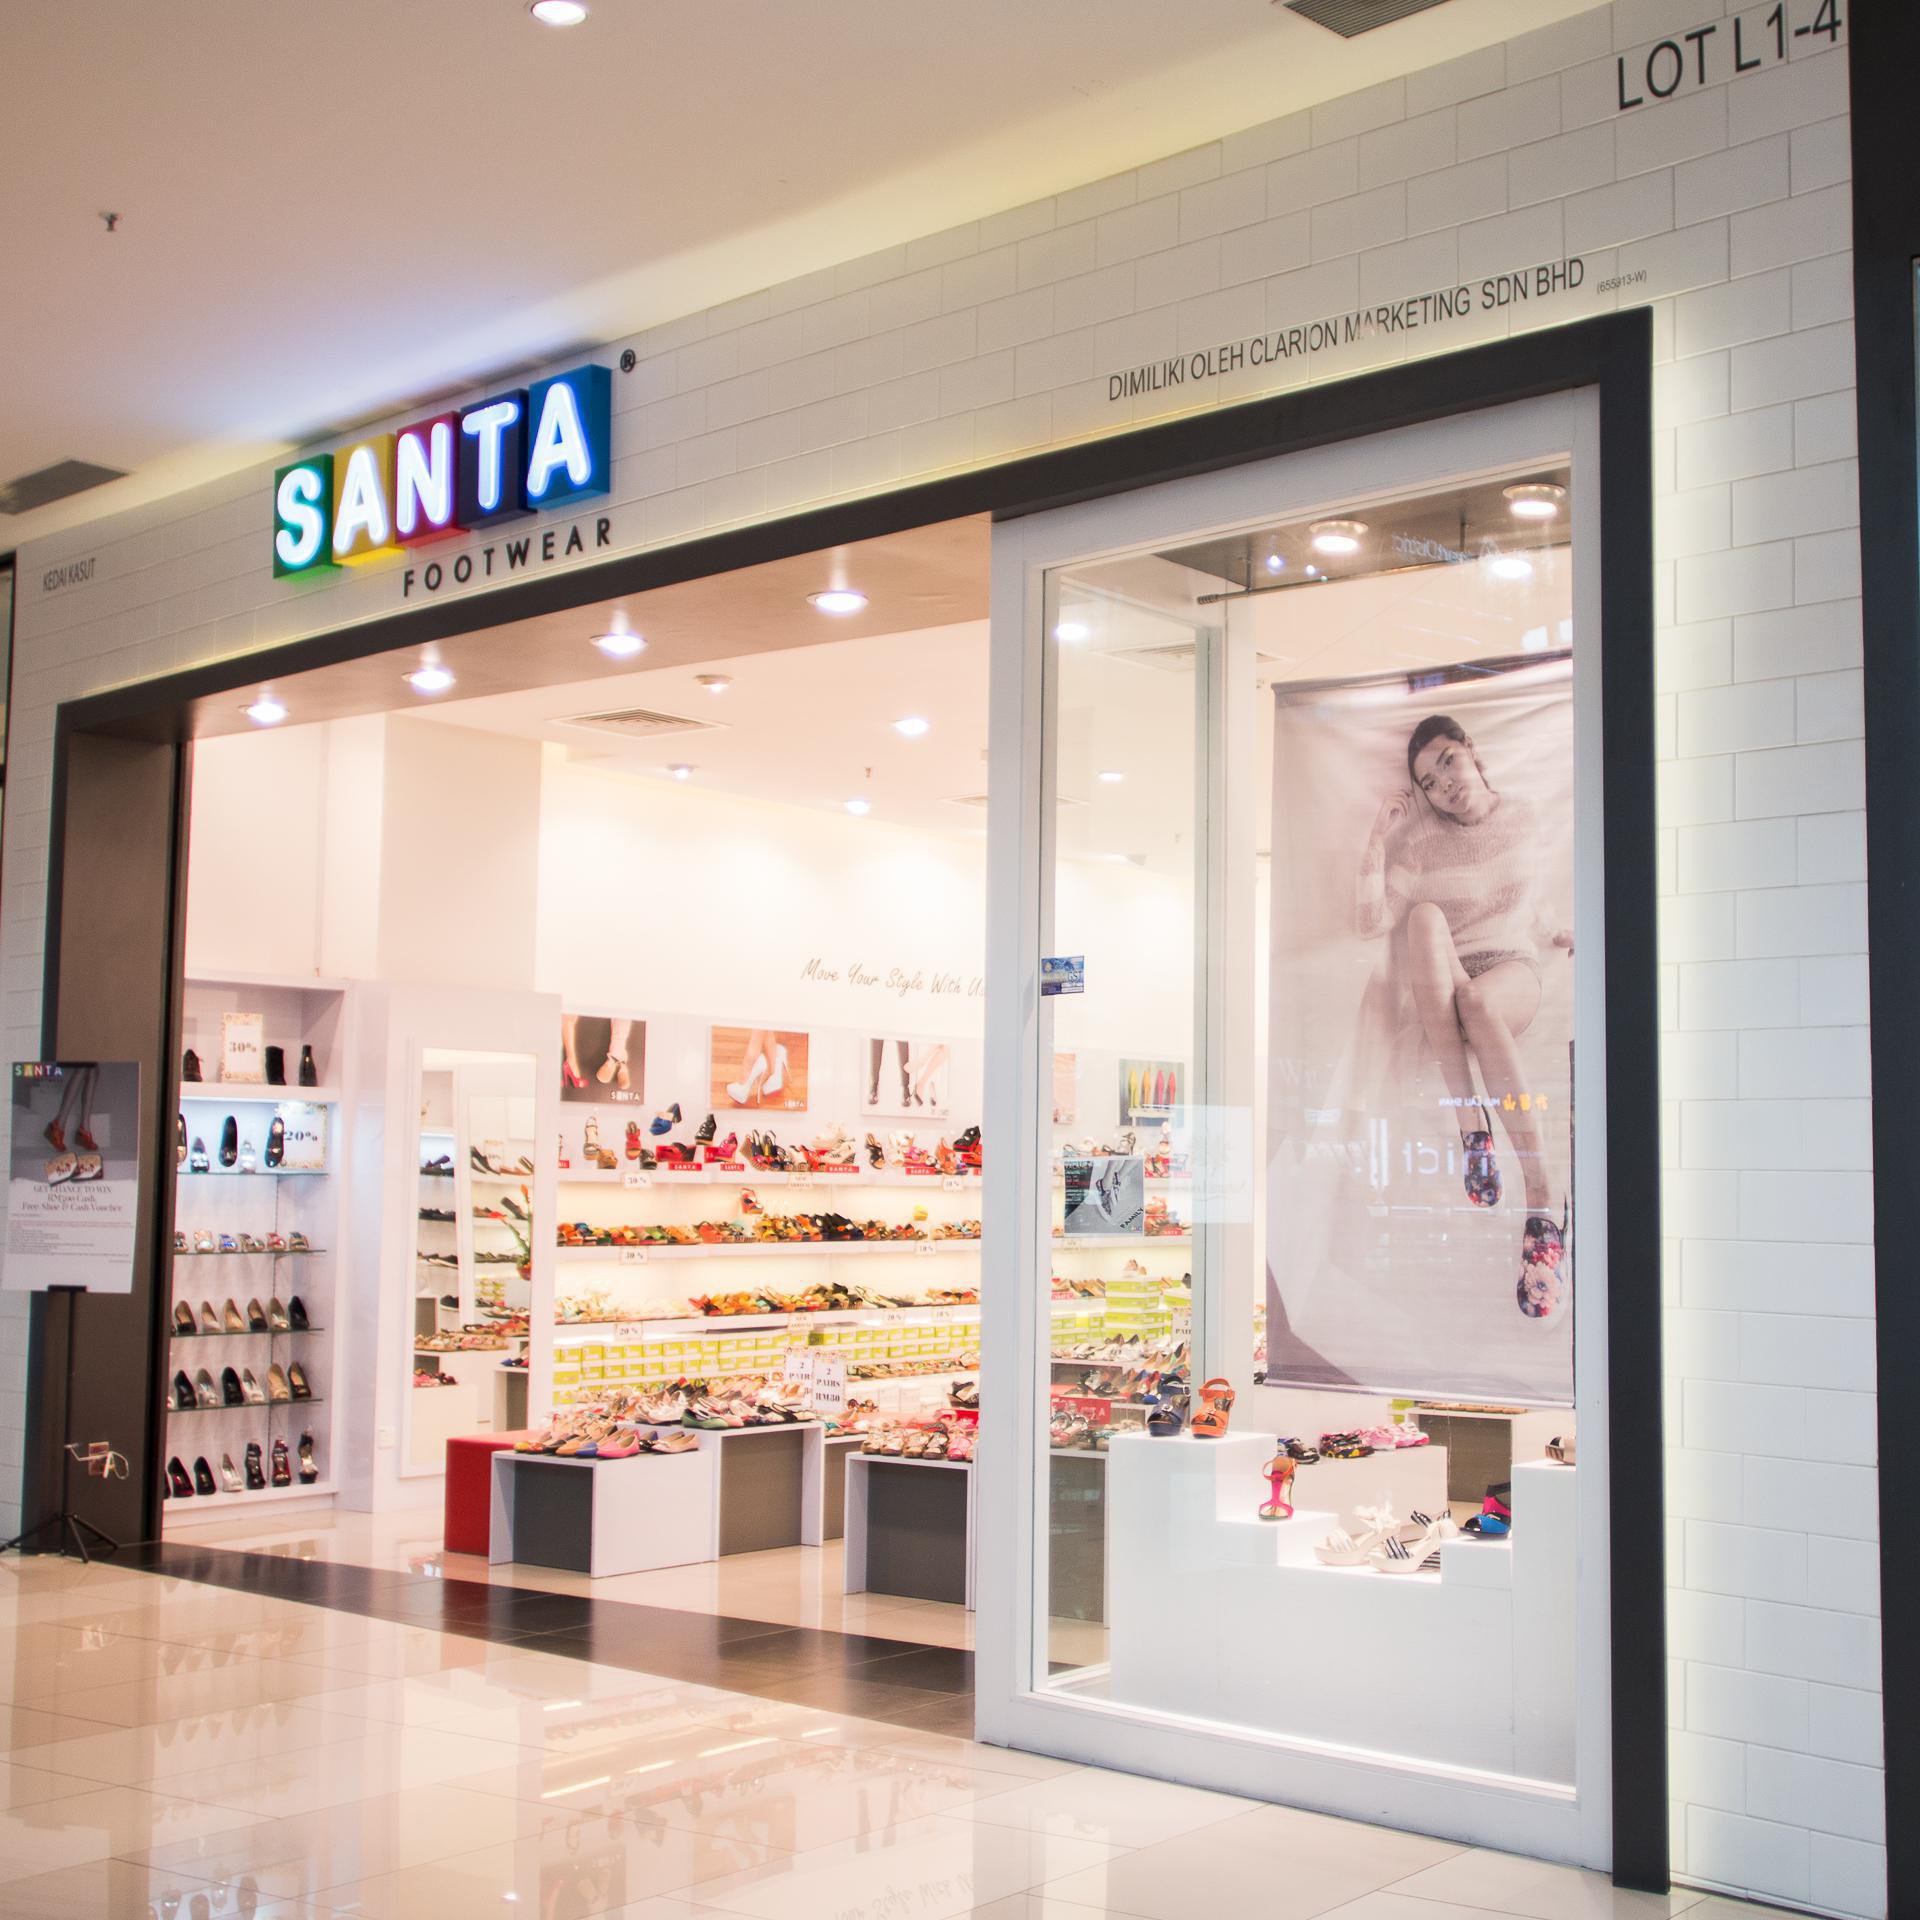 SANTA FOOTWEAR - IOI City Mall Sdn Bhd